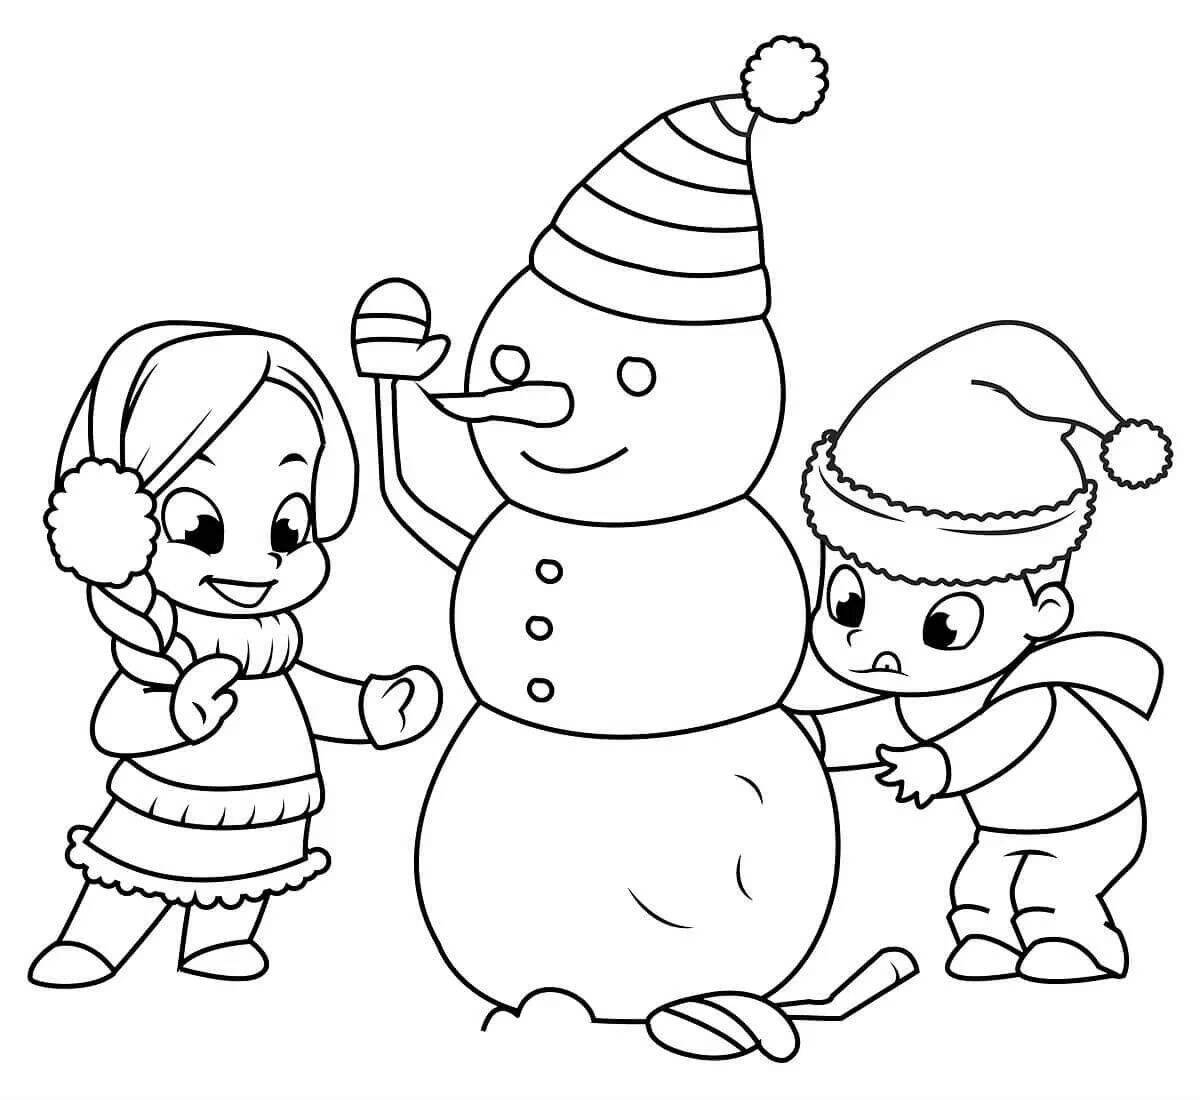 Coloring page playful mega snowman